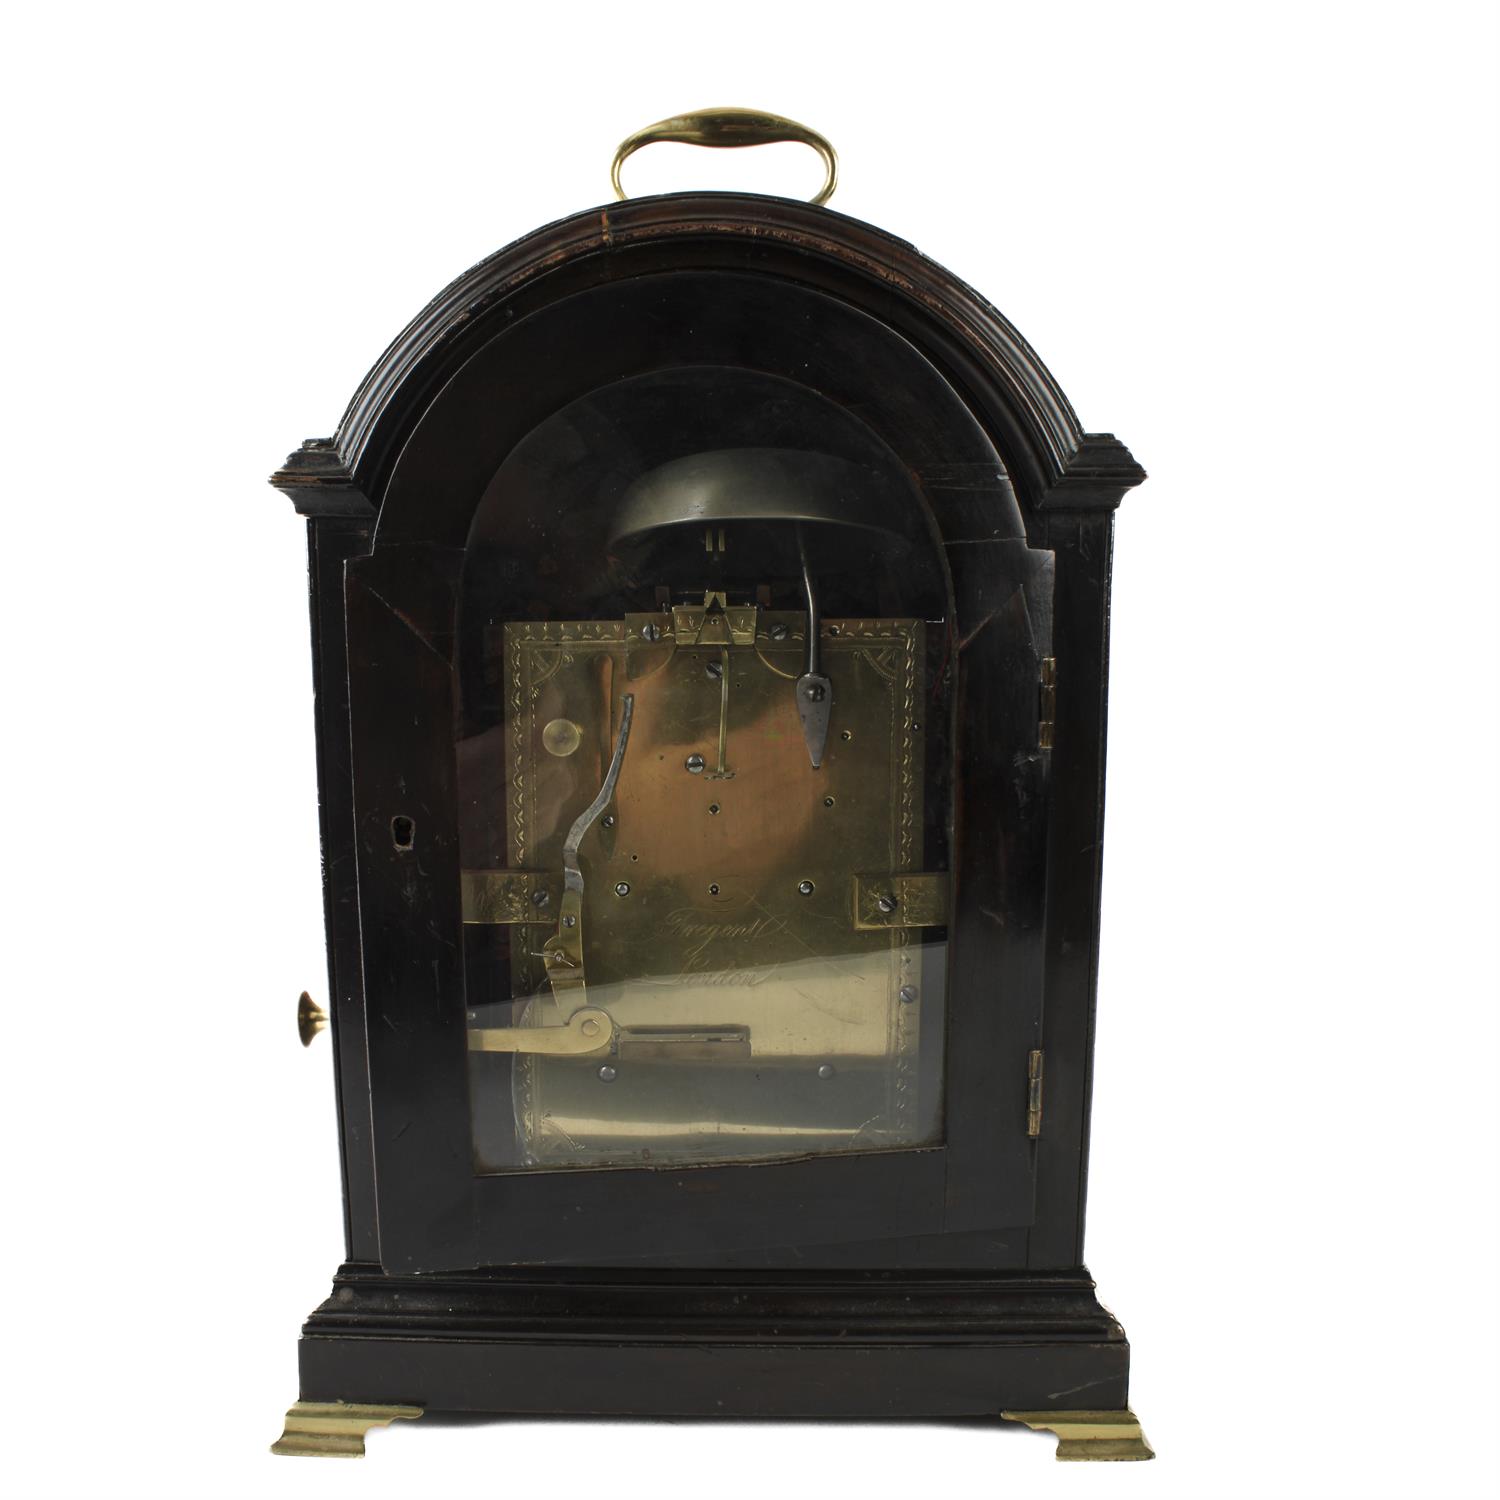 19th Century bracket clock marked Tregent - Image 5 of 7